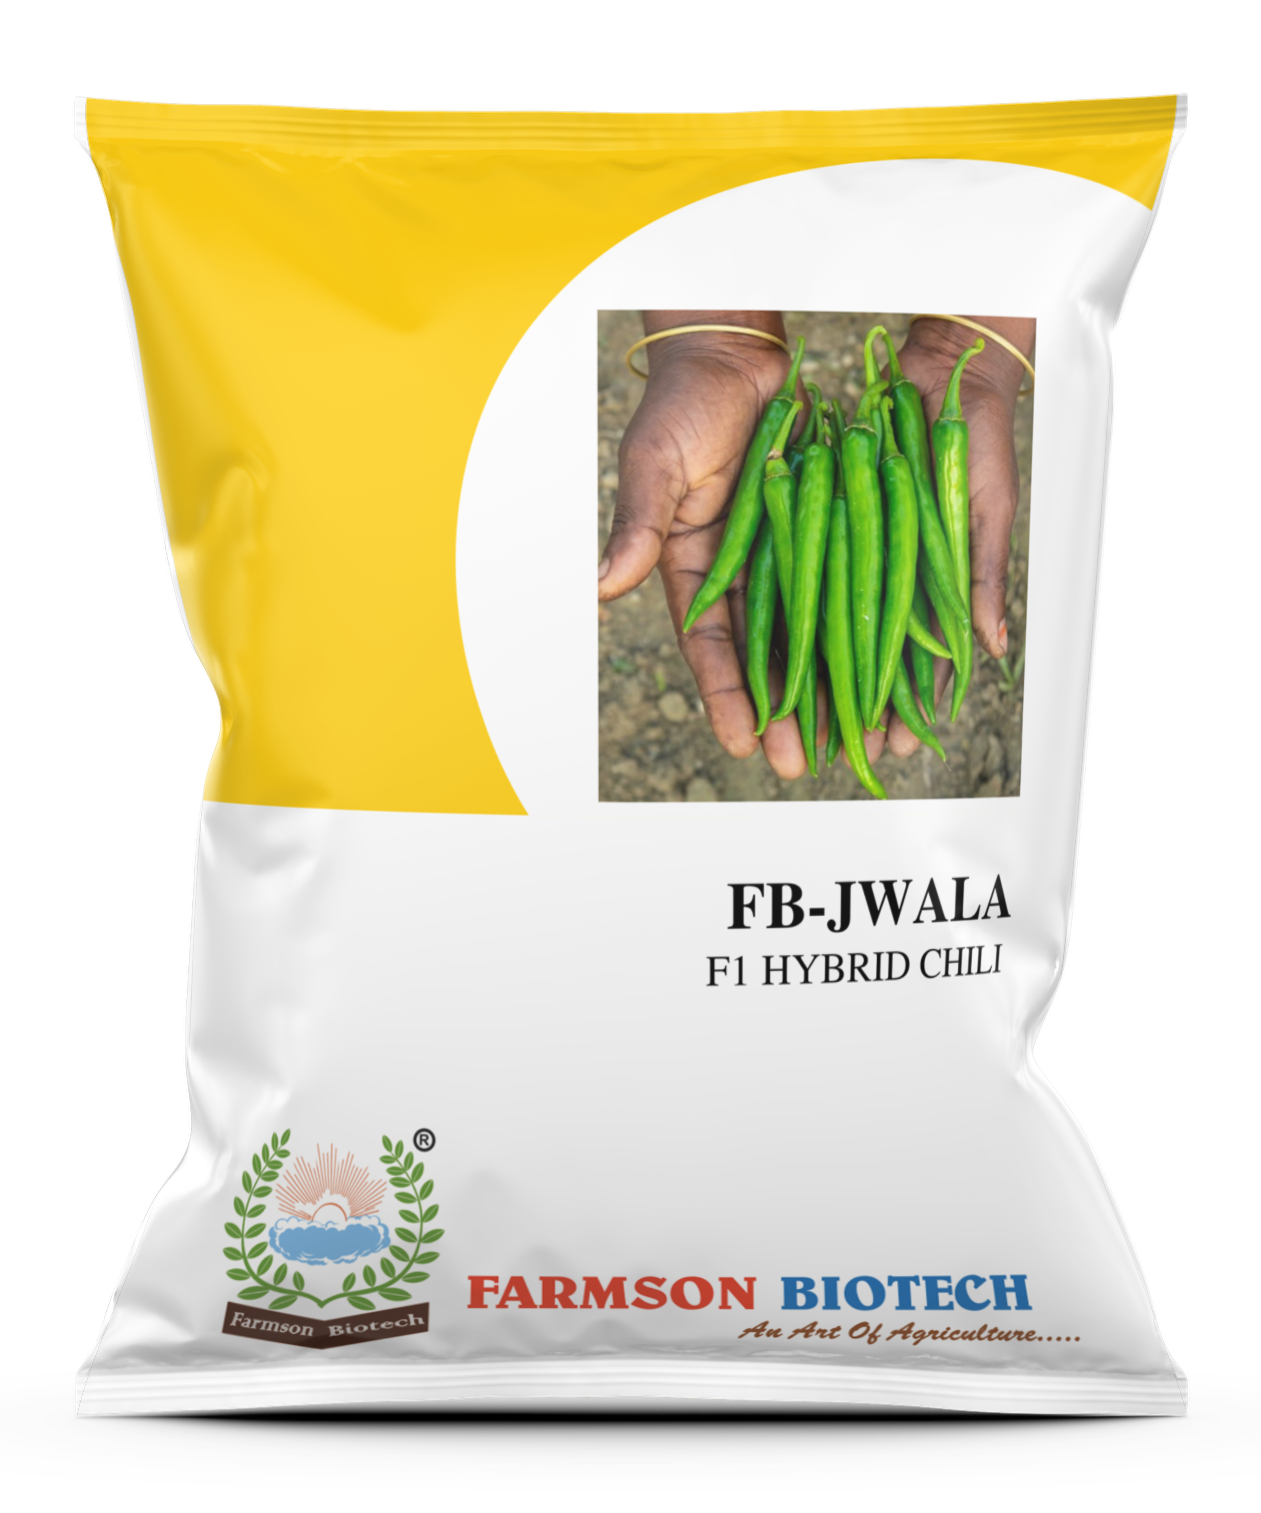 FB-JWALA F1 Hybrid Chili Seeds FARMSON BIOTECH